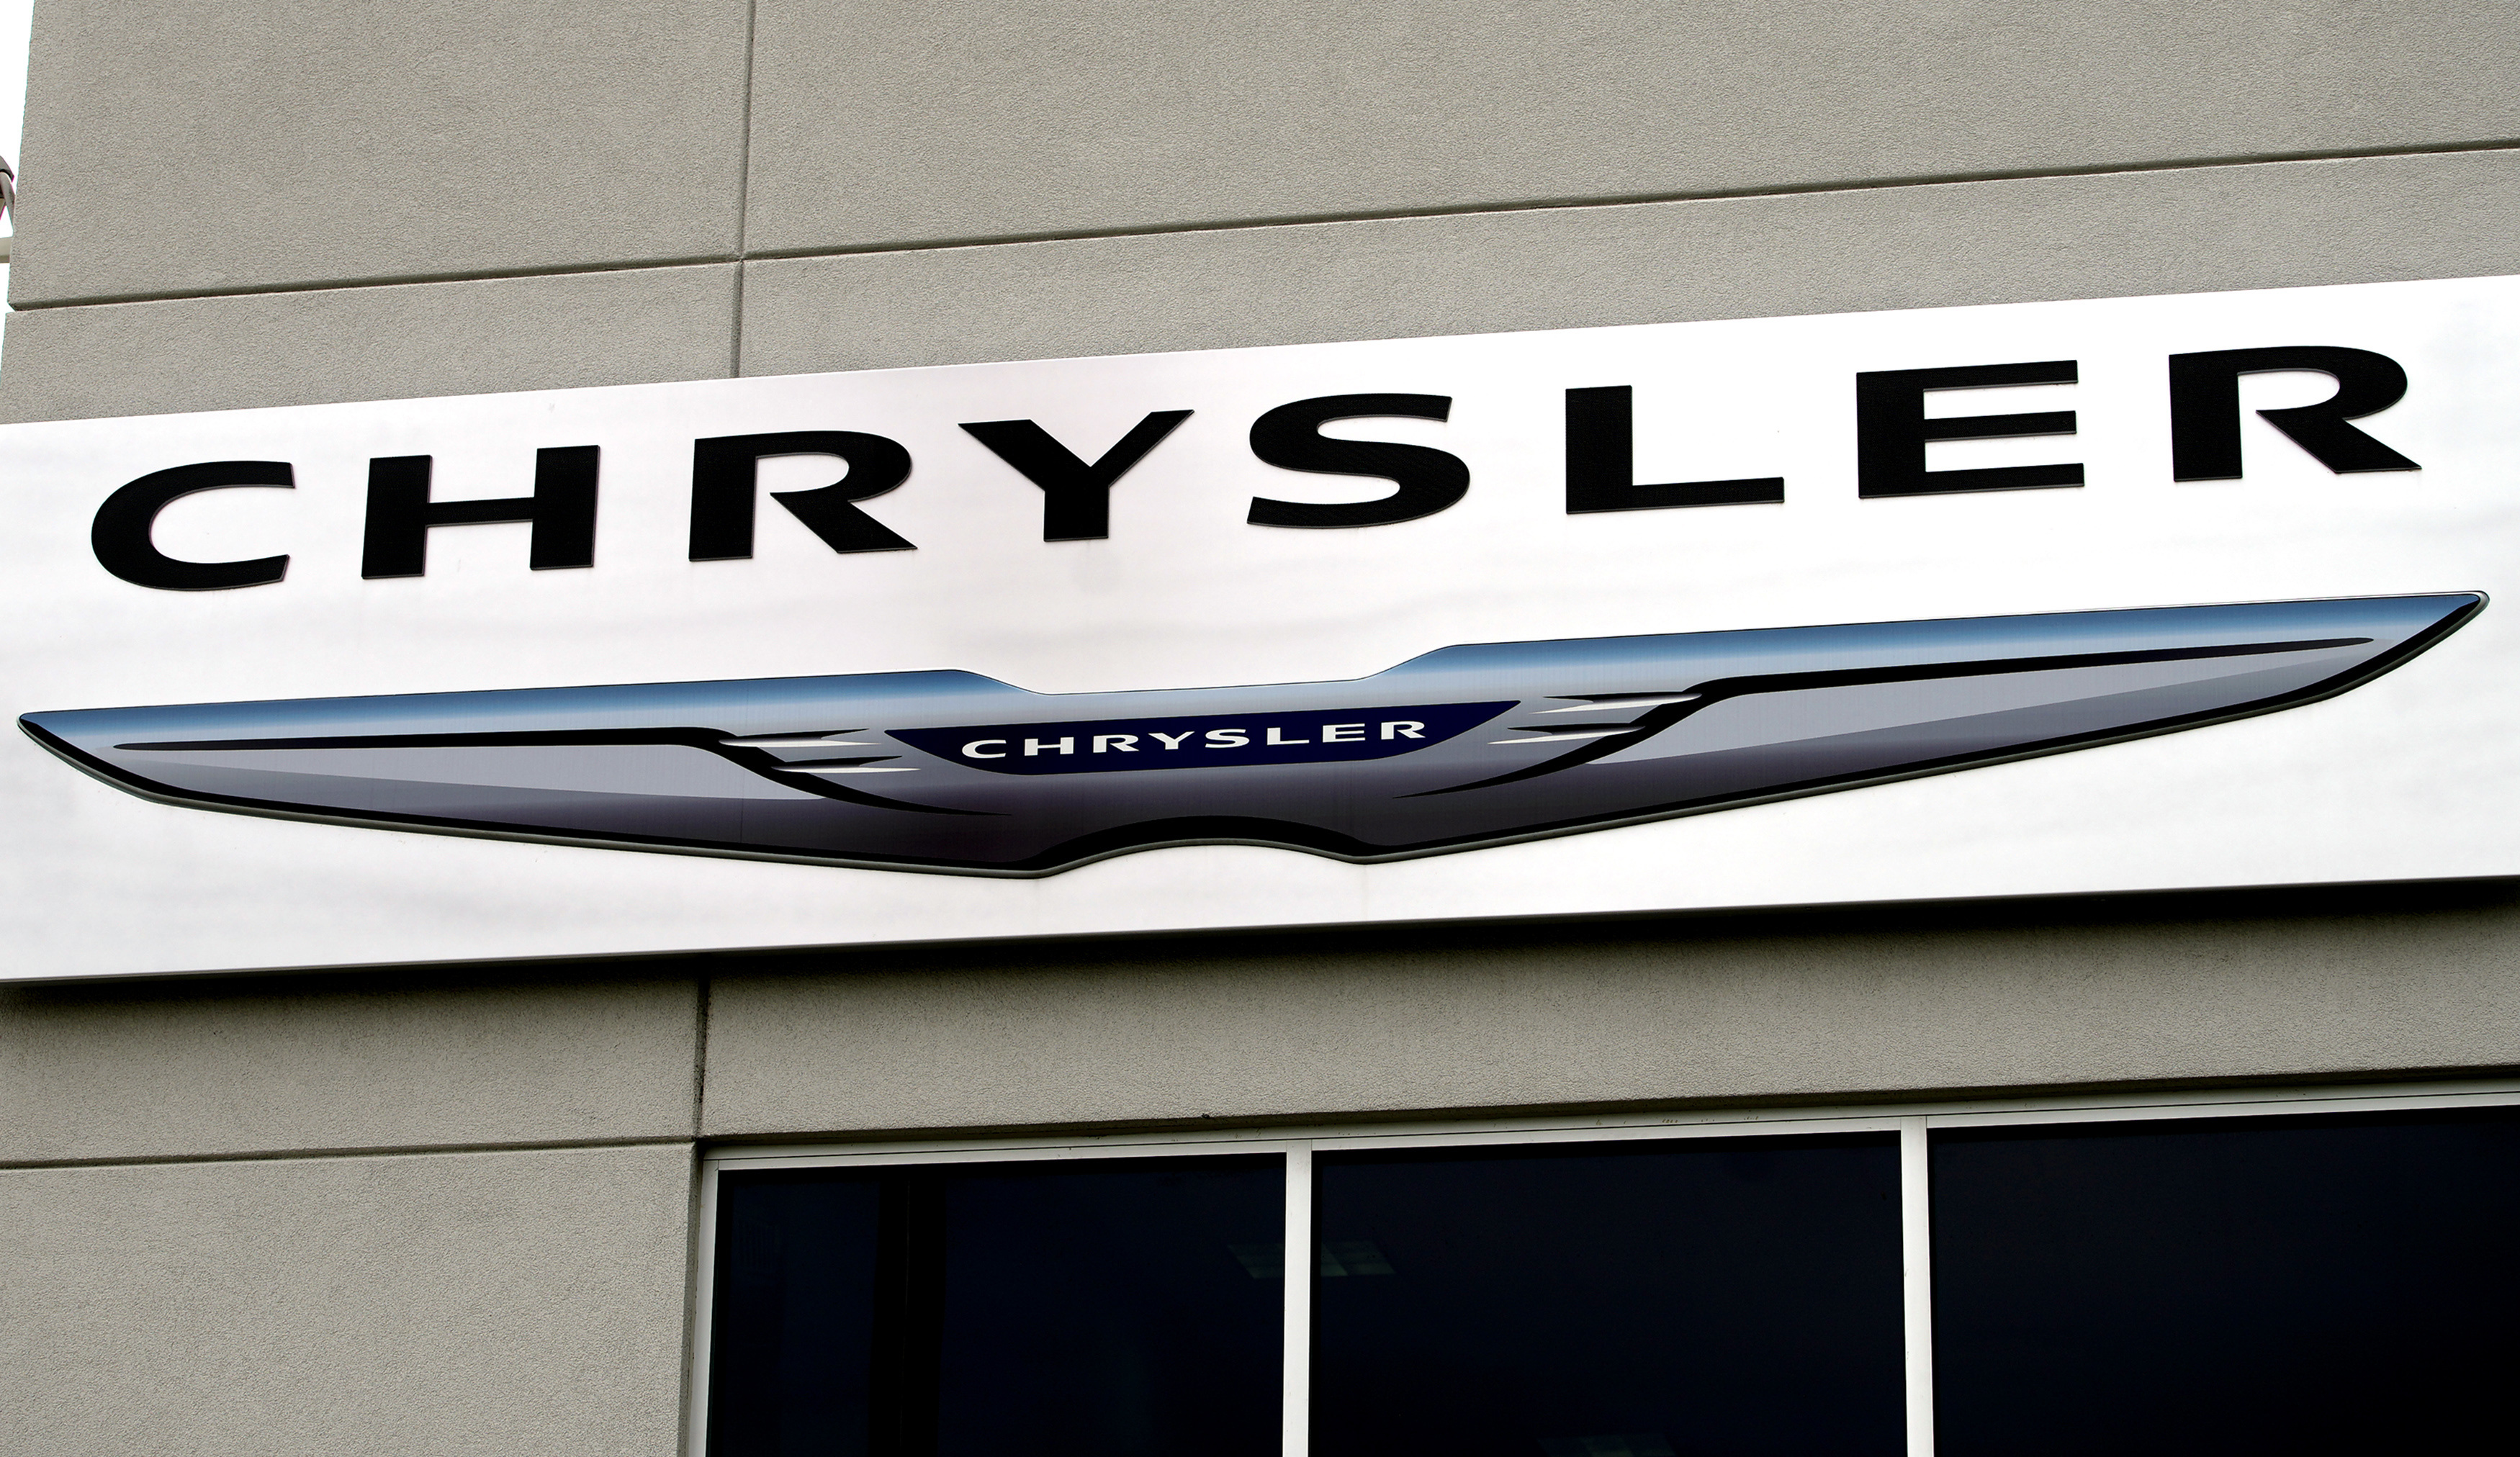 The Chrysler logo is seen outside the Chrysler auto dealer in Broomfield, Colorado